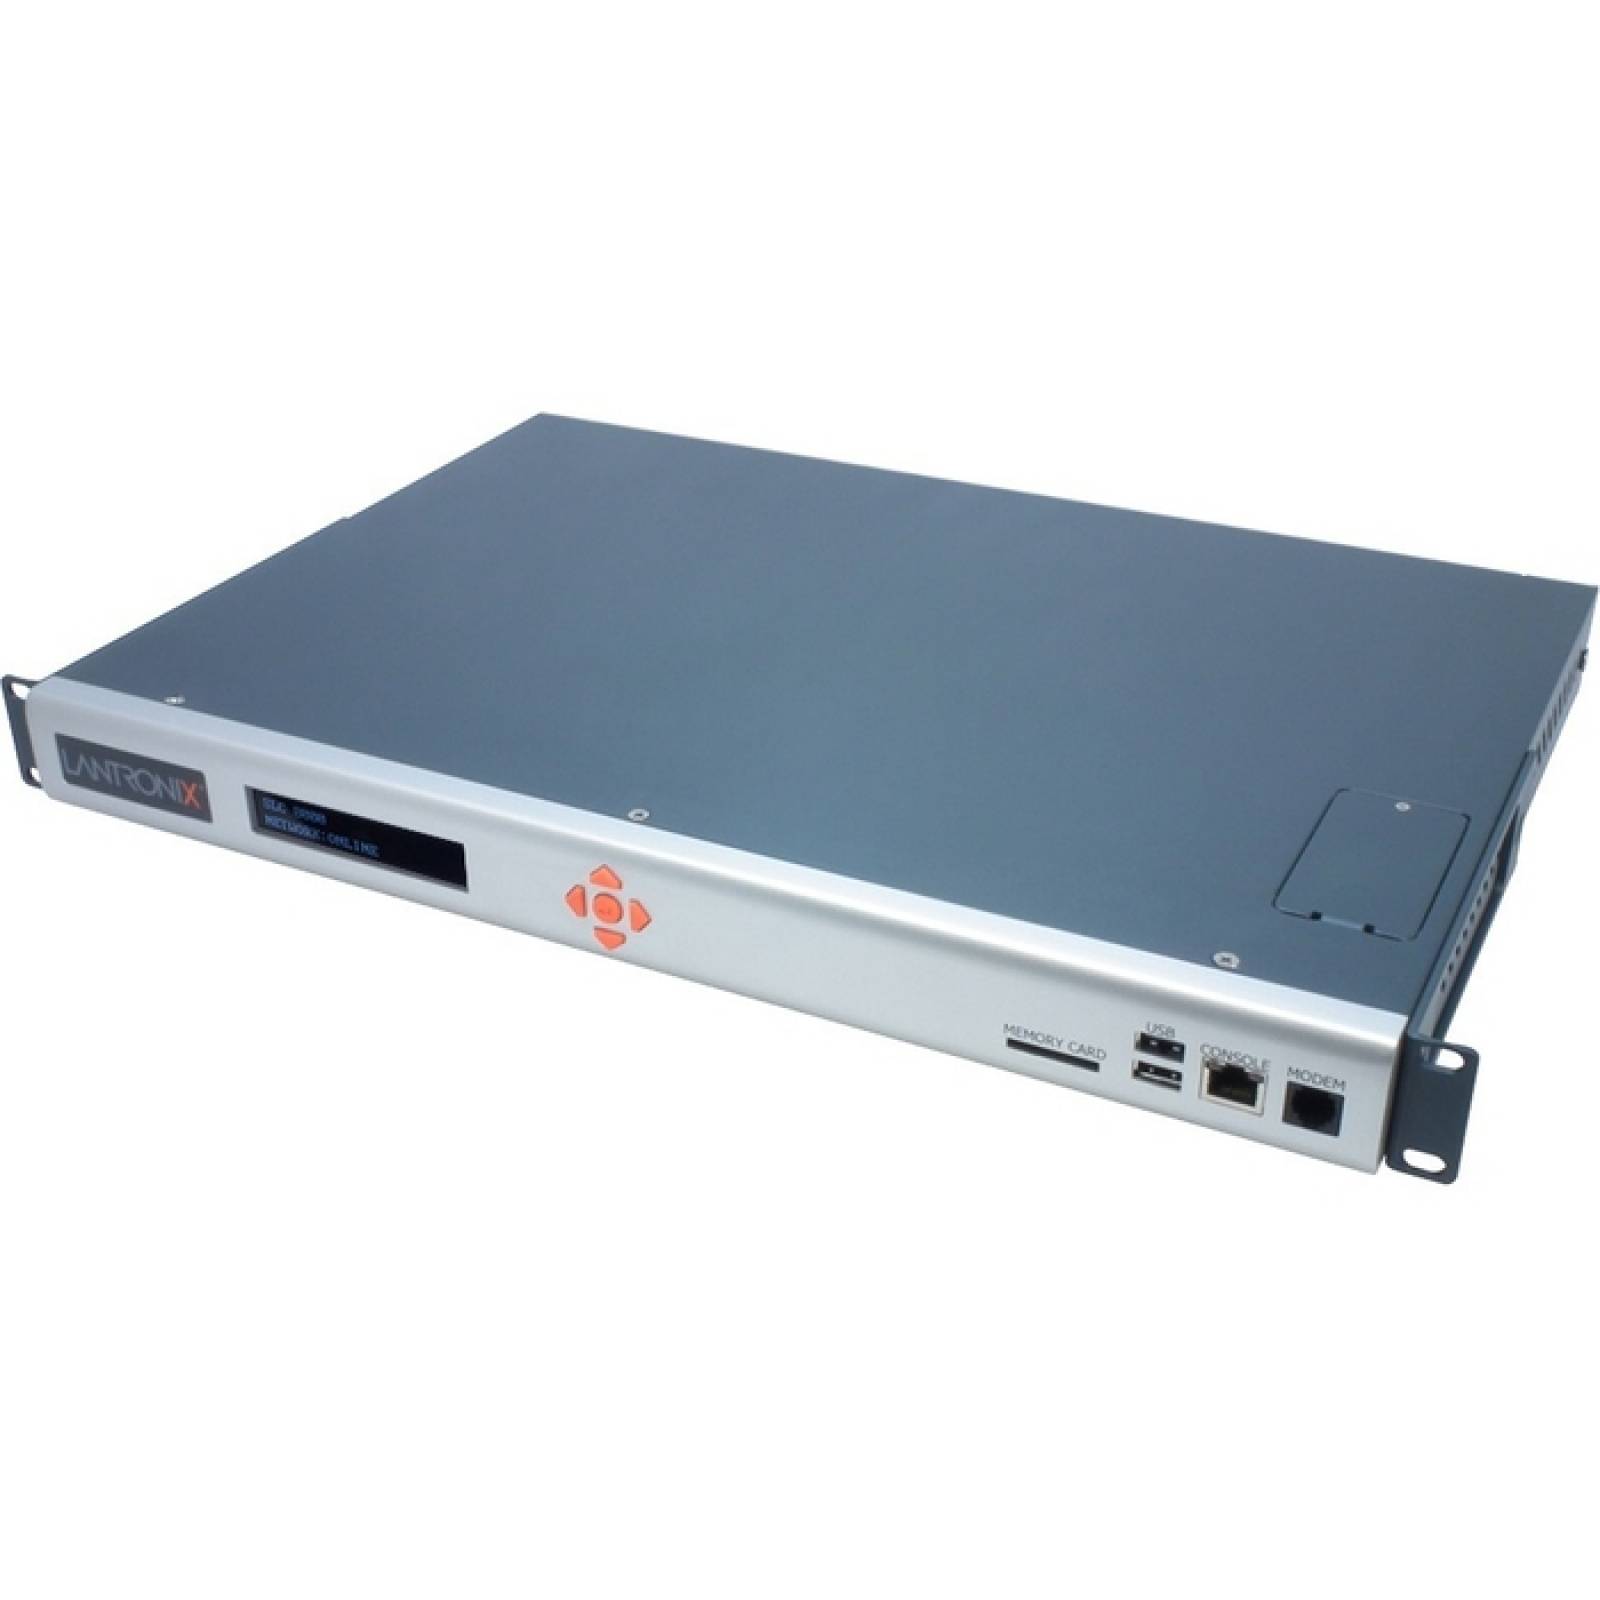 Lantronix SLC 8000 Advanced Console Manager RJ45 48 puertos ACDual Supply